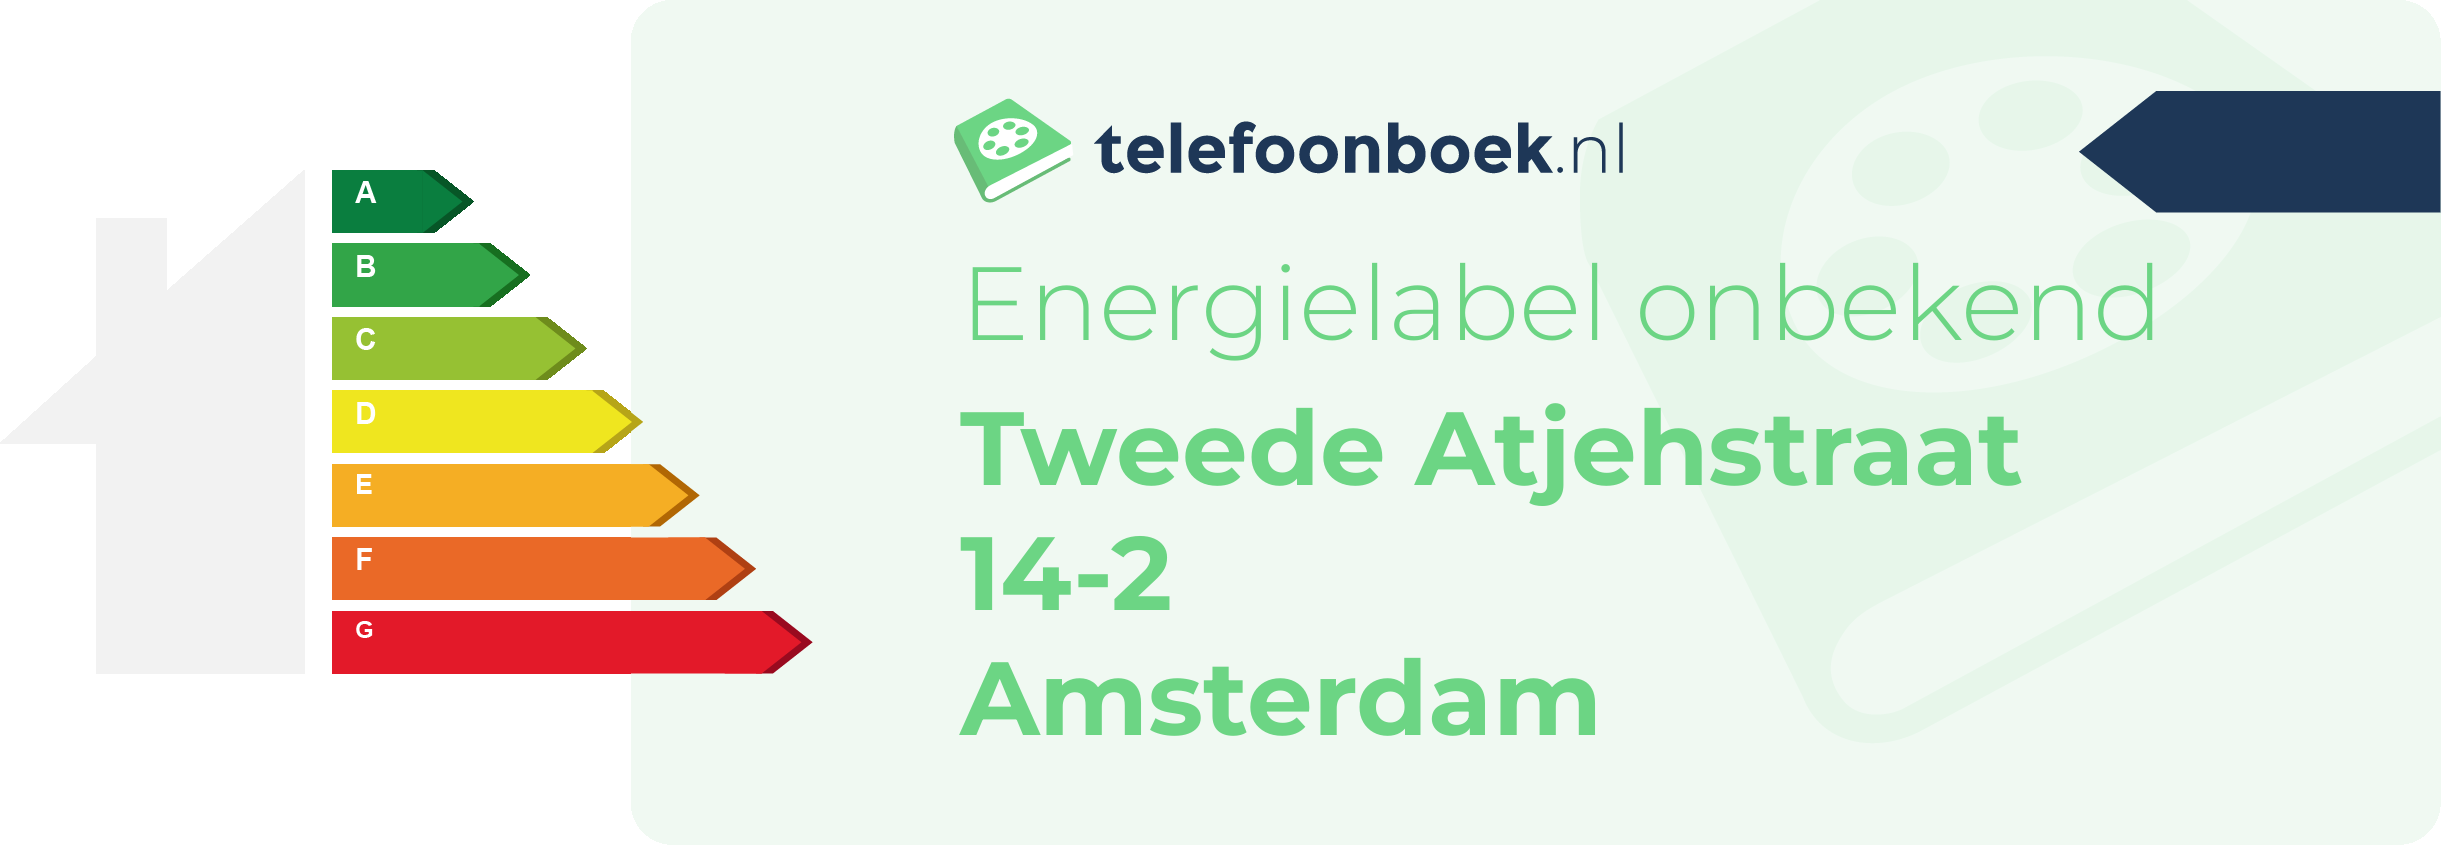 Energielabel Tweede Atjehstraat 14-2 Amsterdam